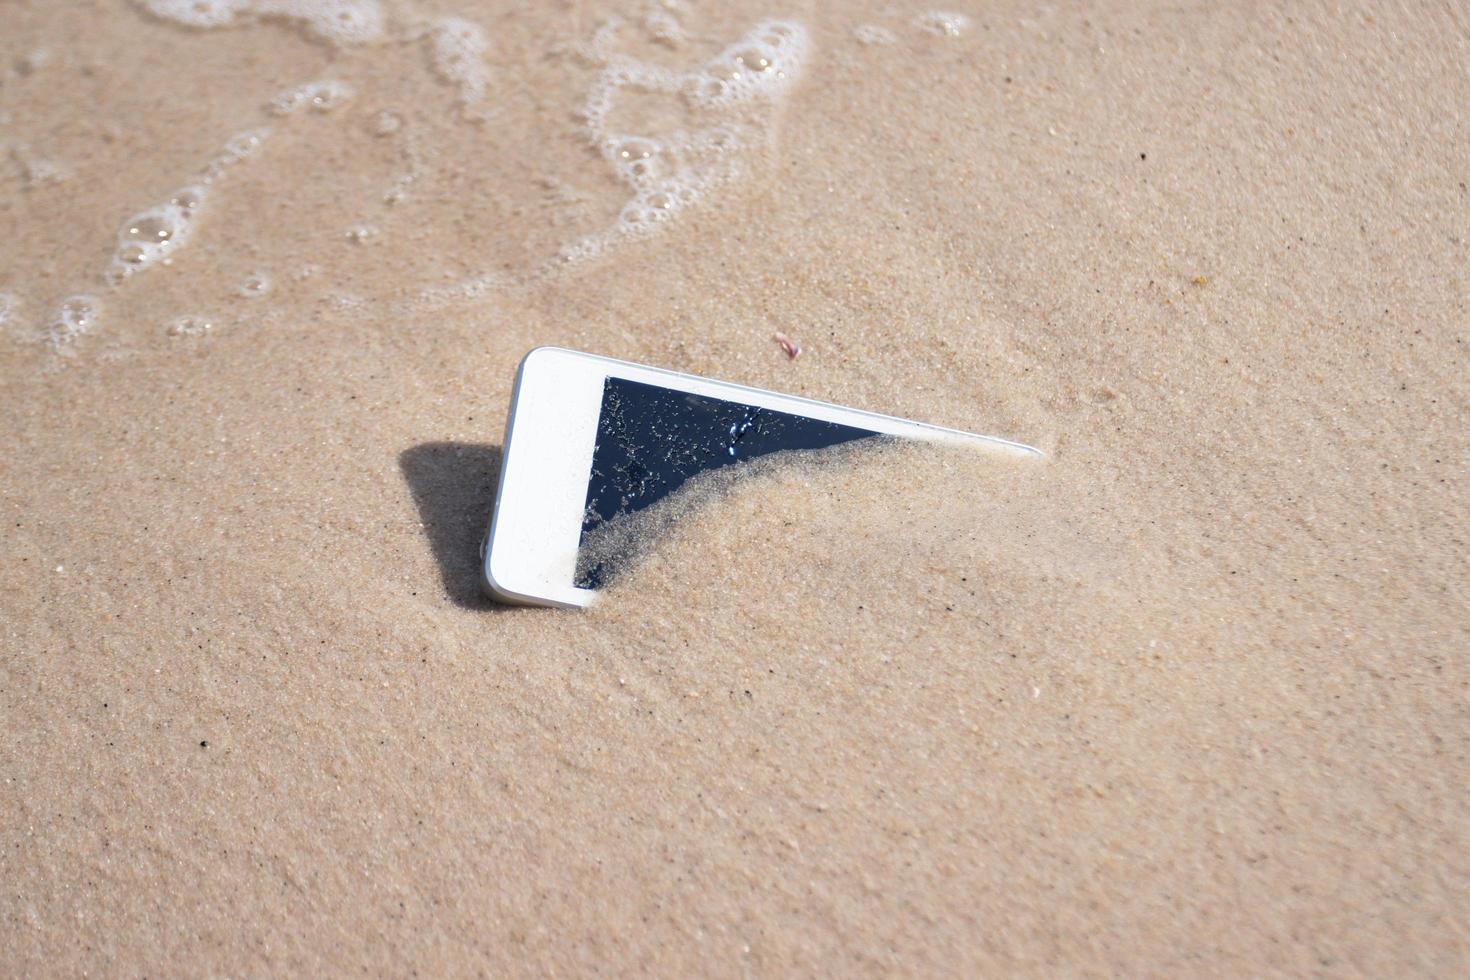 vit mobiltelefon på sand på stranden koncept elektroniskt avfall foto